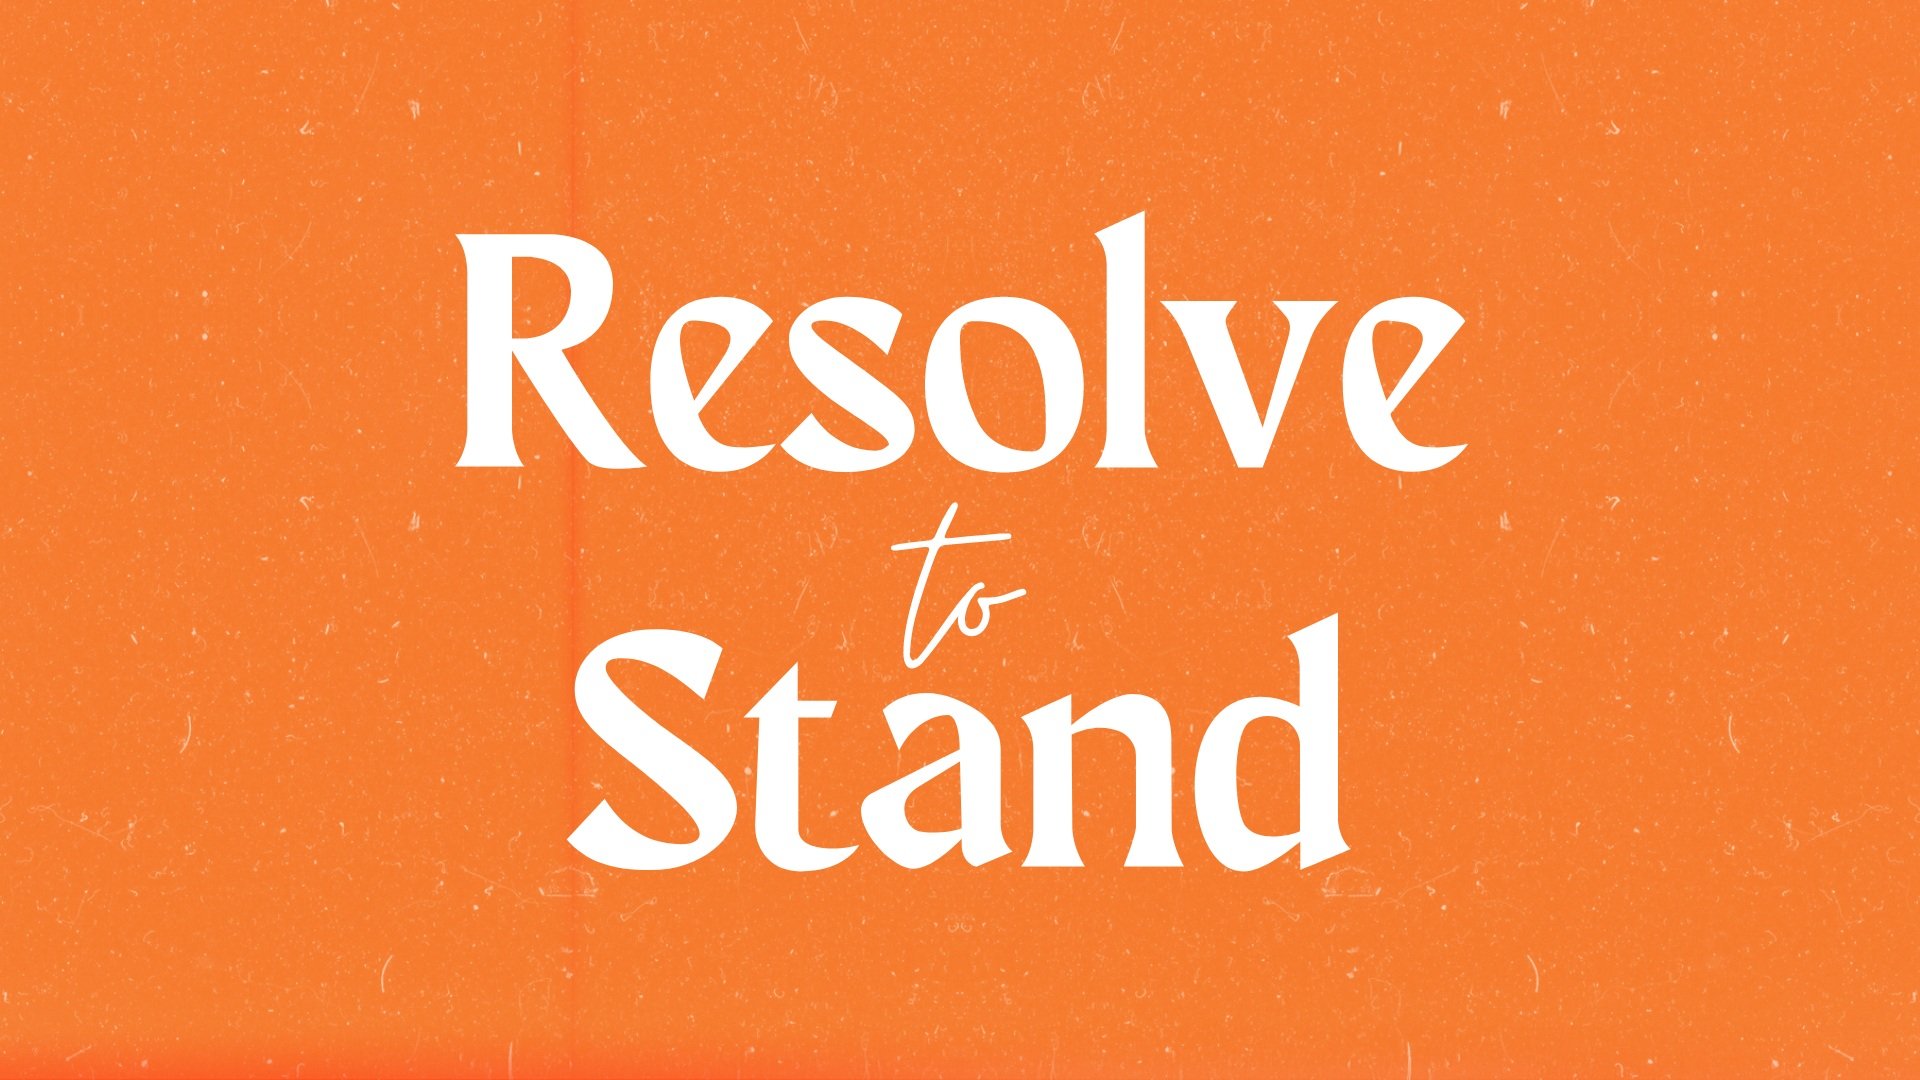 Resolve+to+stand+2.jpg